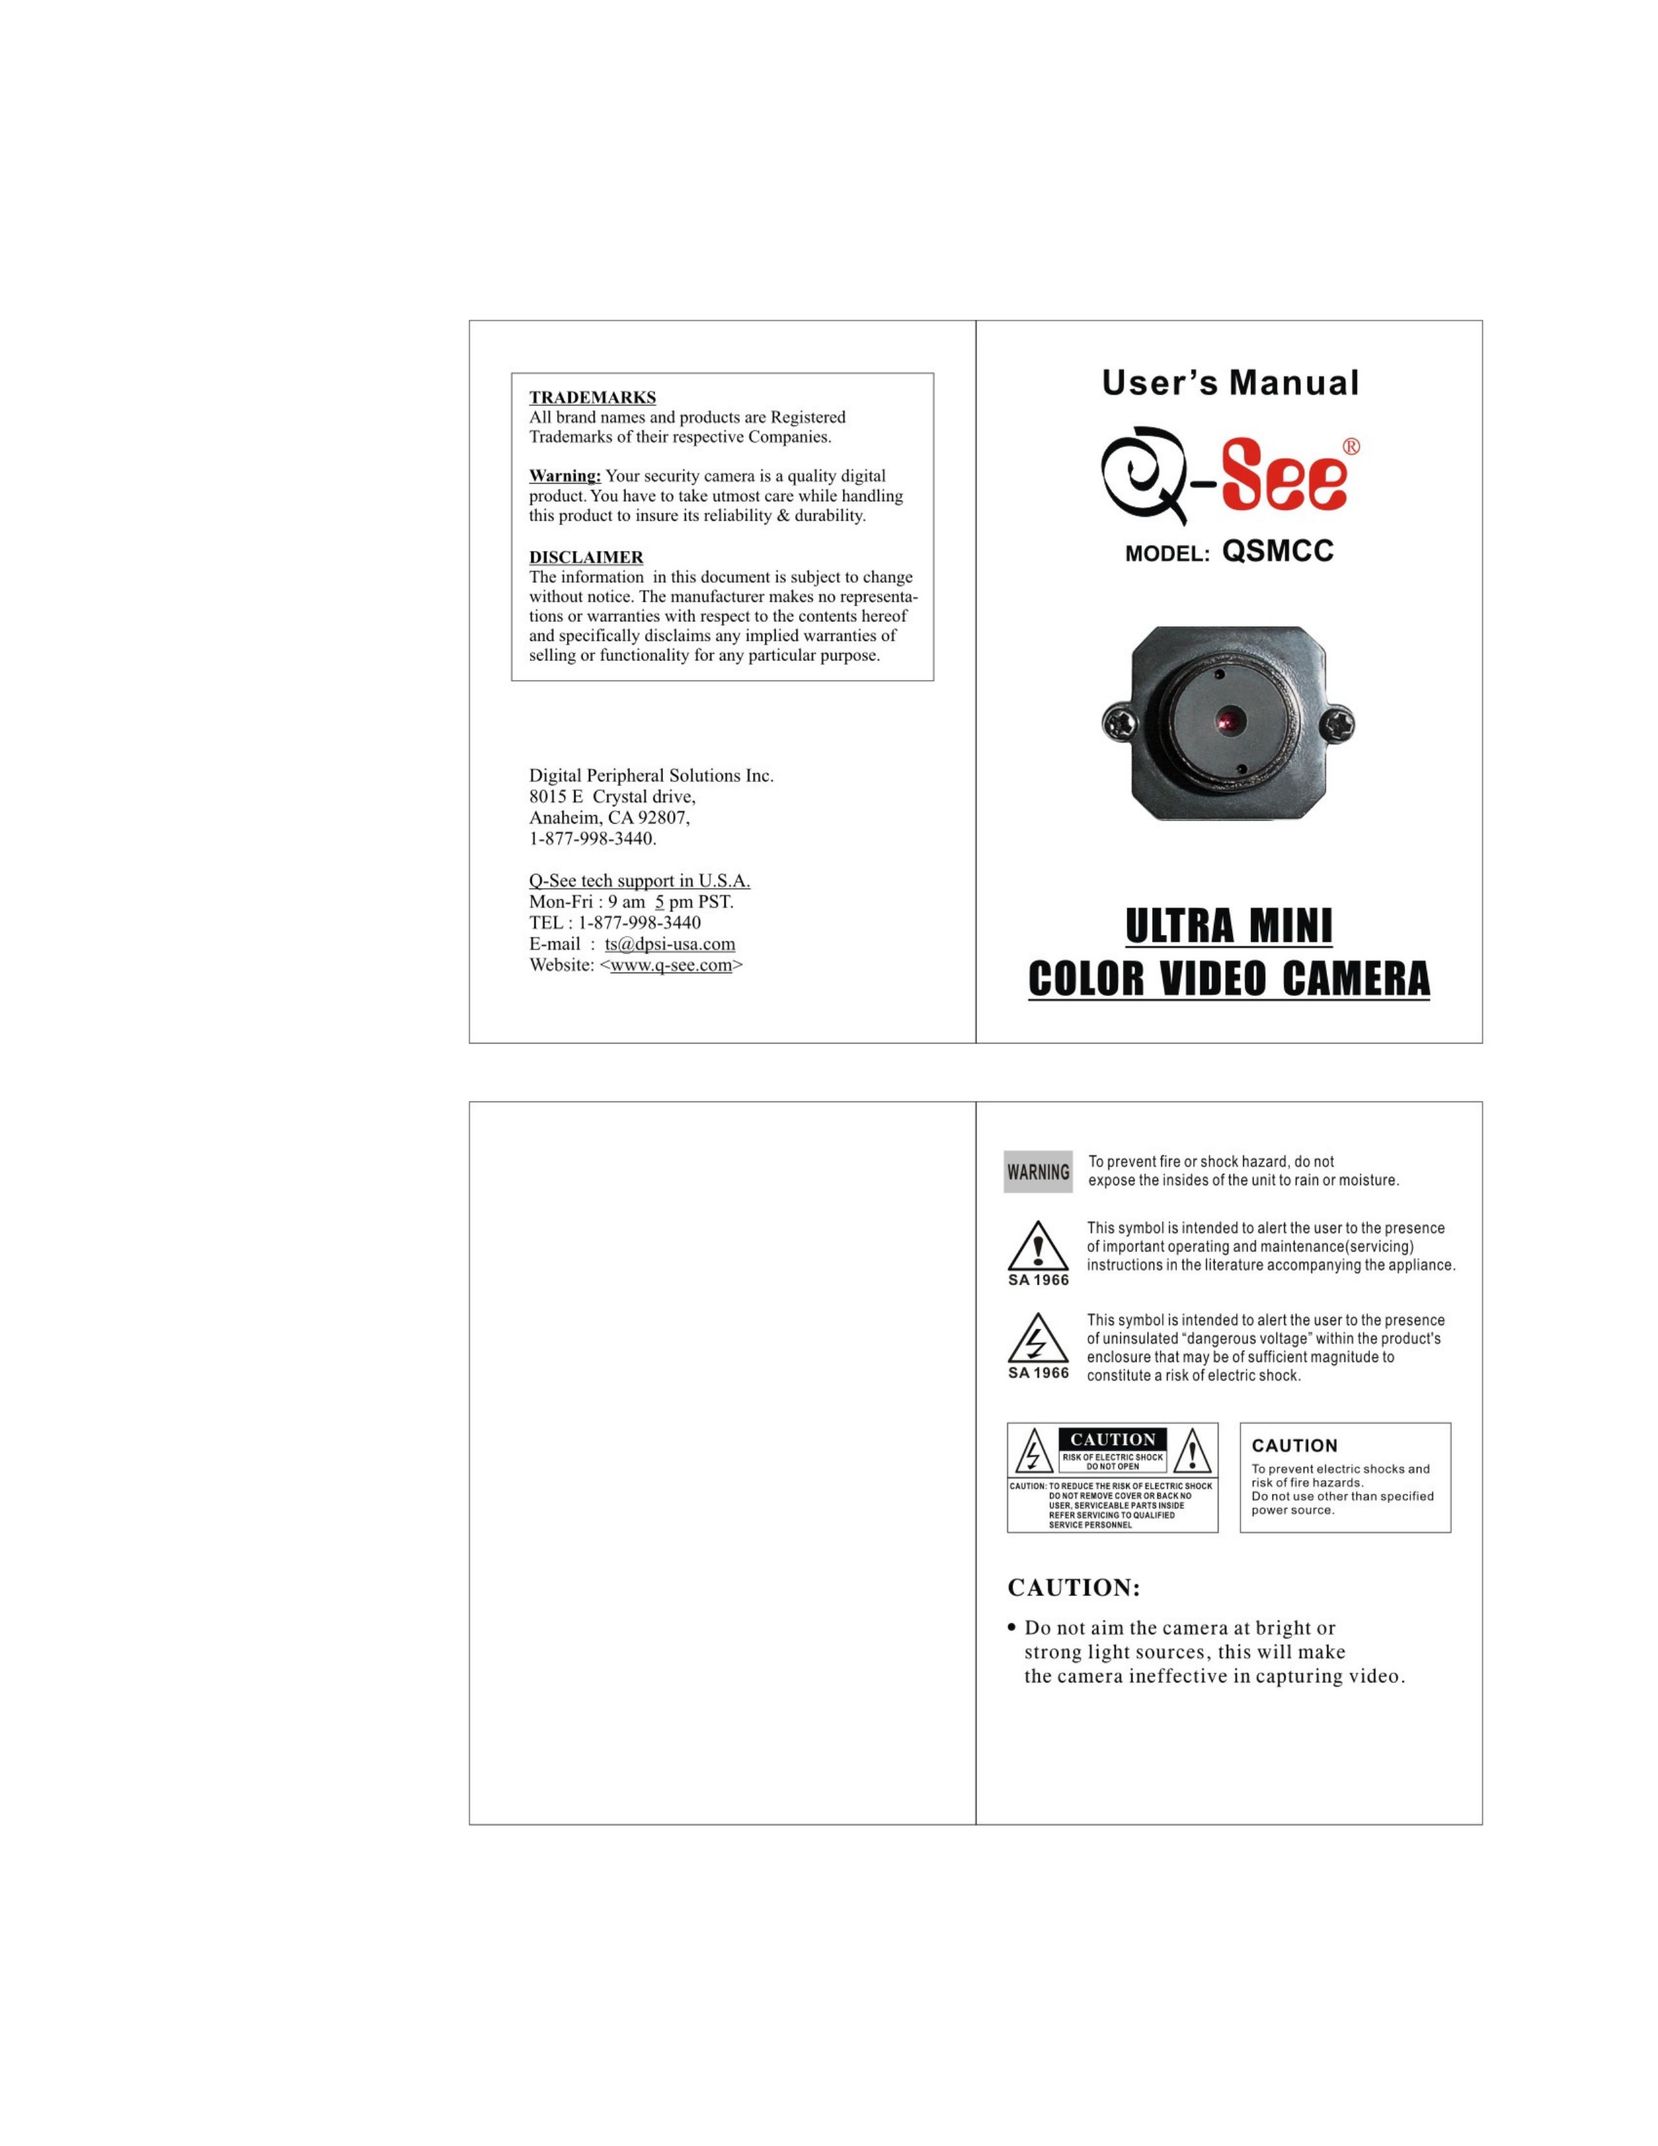 Q-See QSMCC Cordless Telephone User Manual